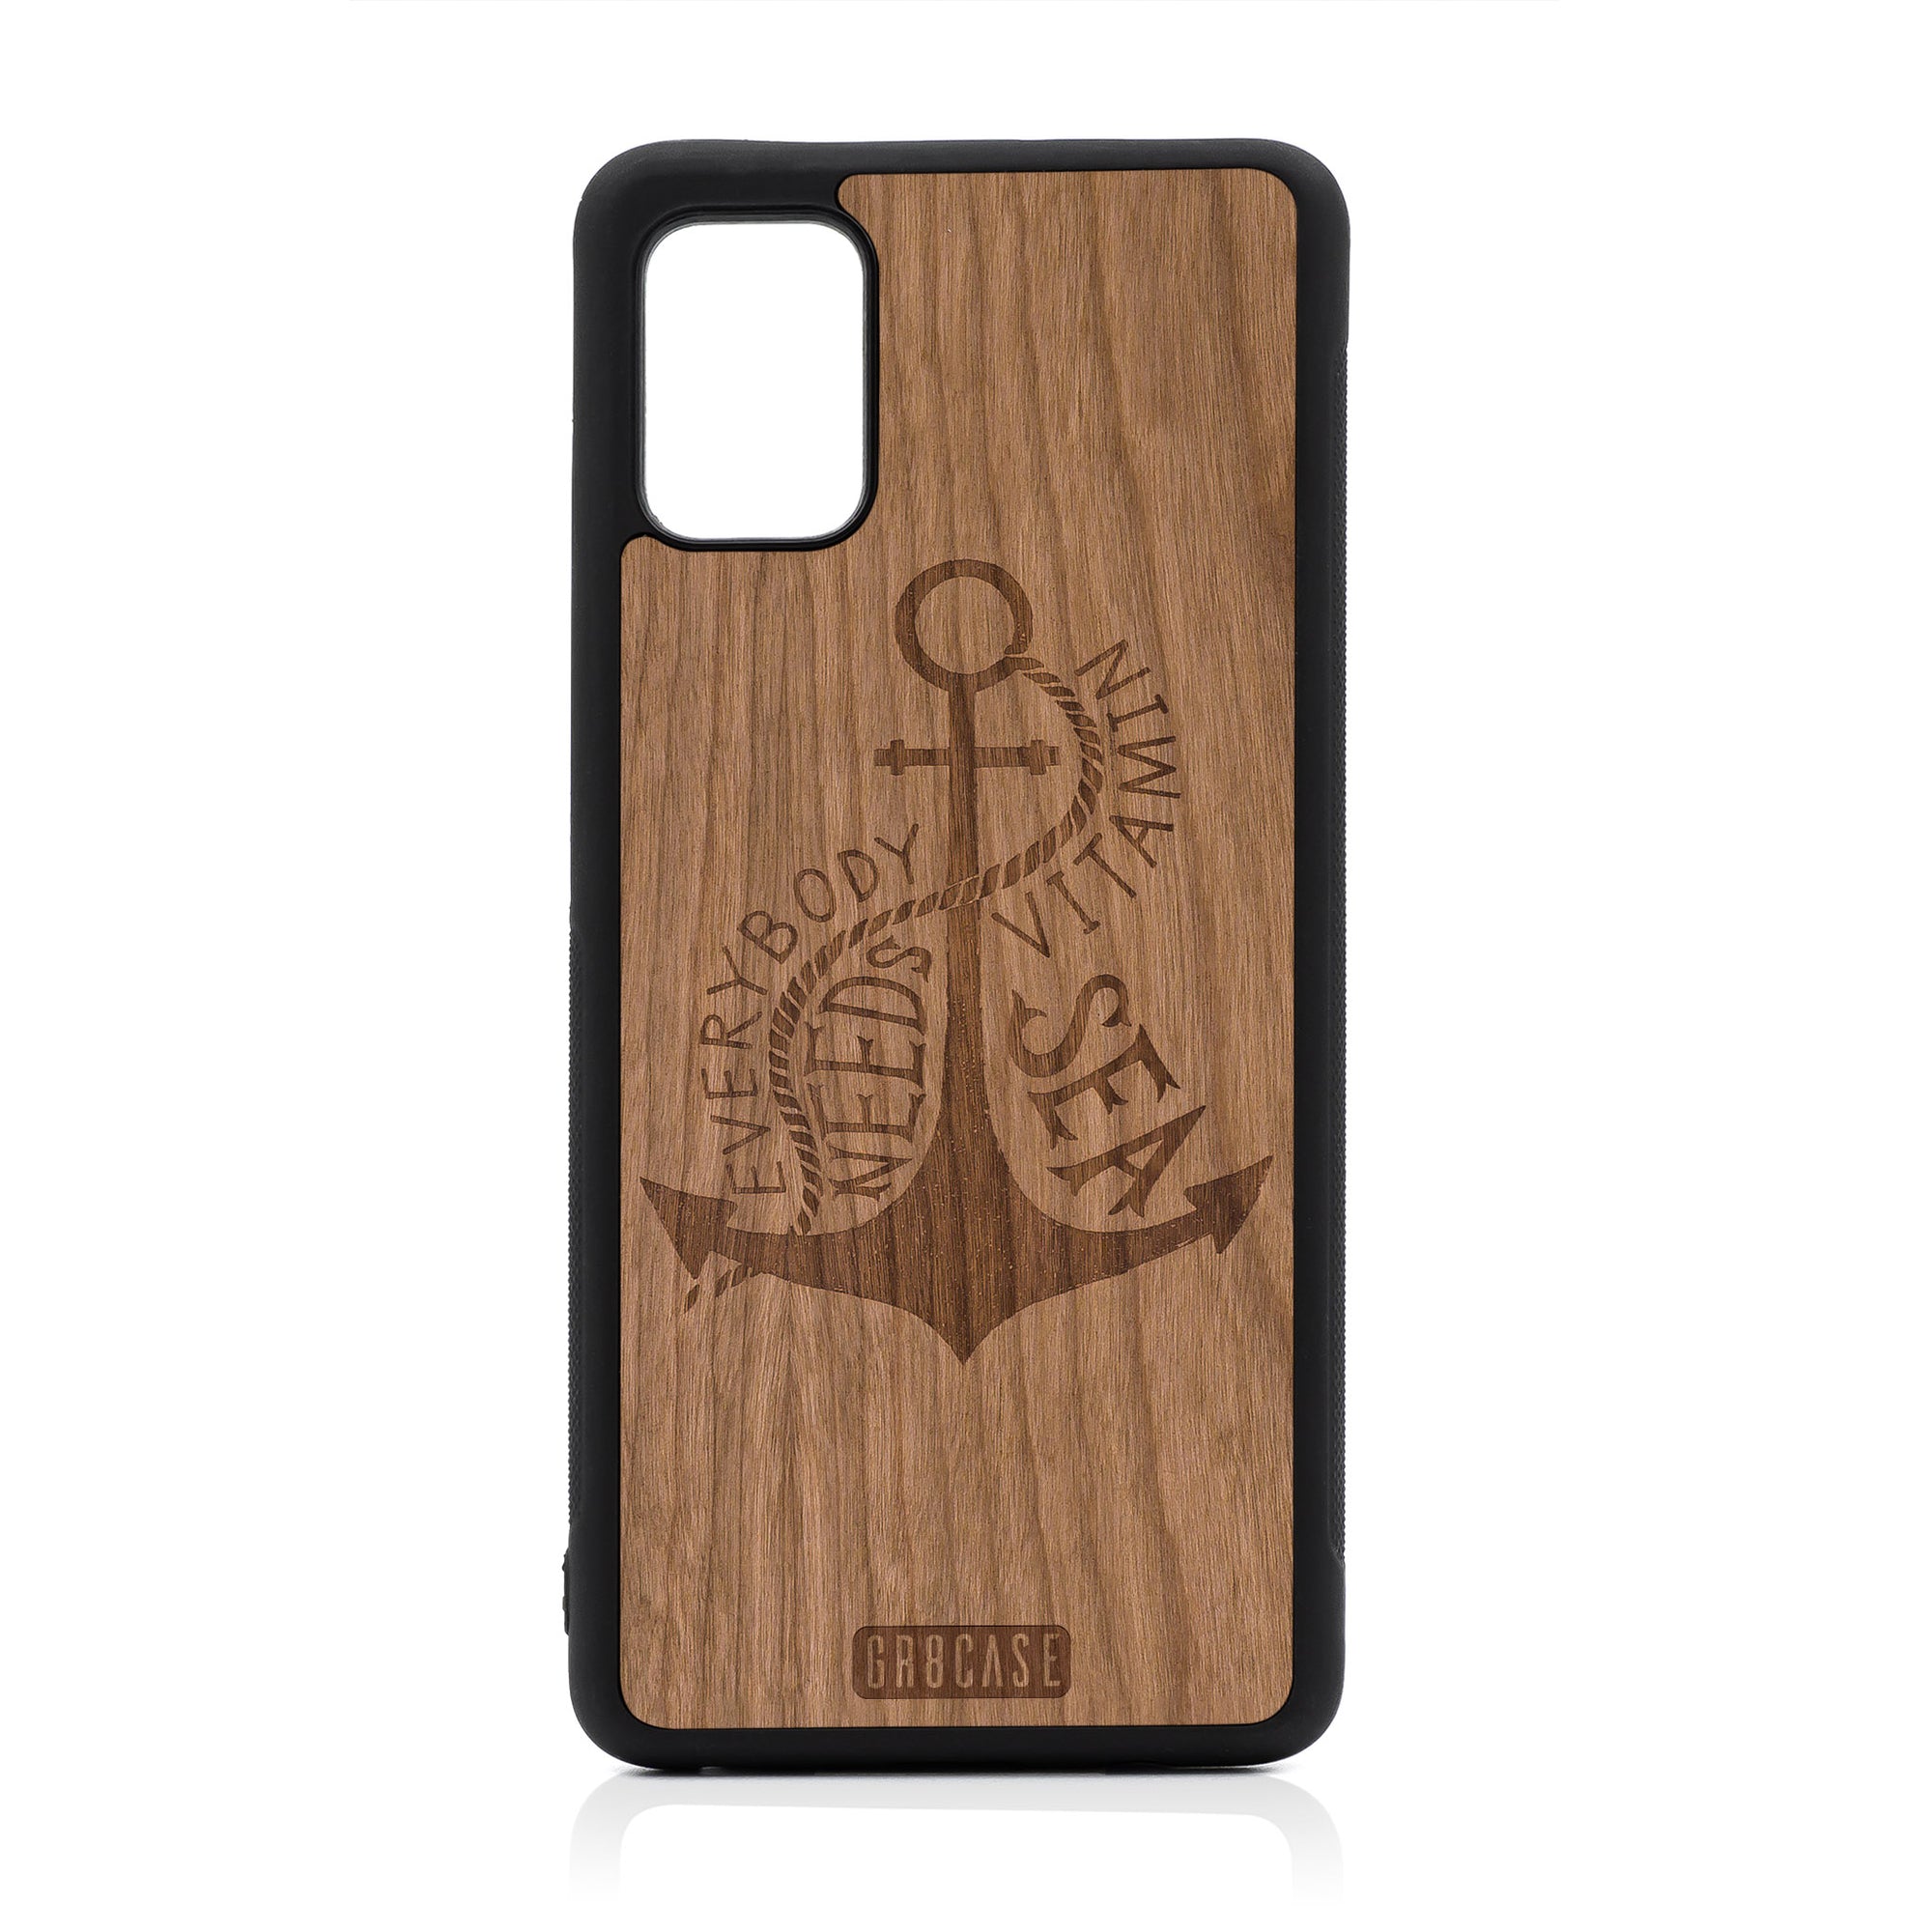 Everybody Needs Vitamin Sea (Anchor) Design Wood Case For Samsung Galaxy A51